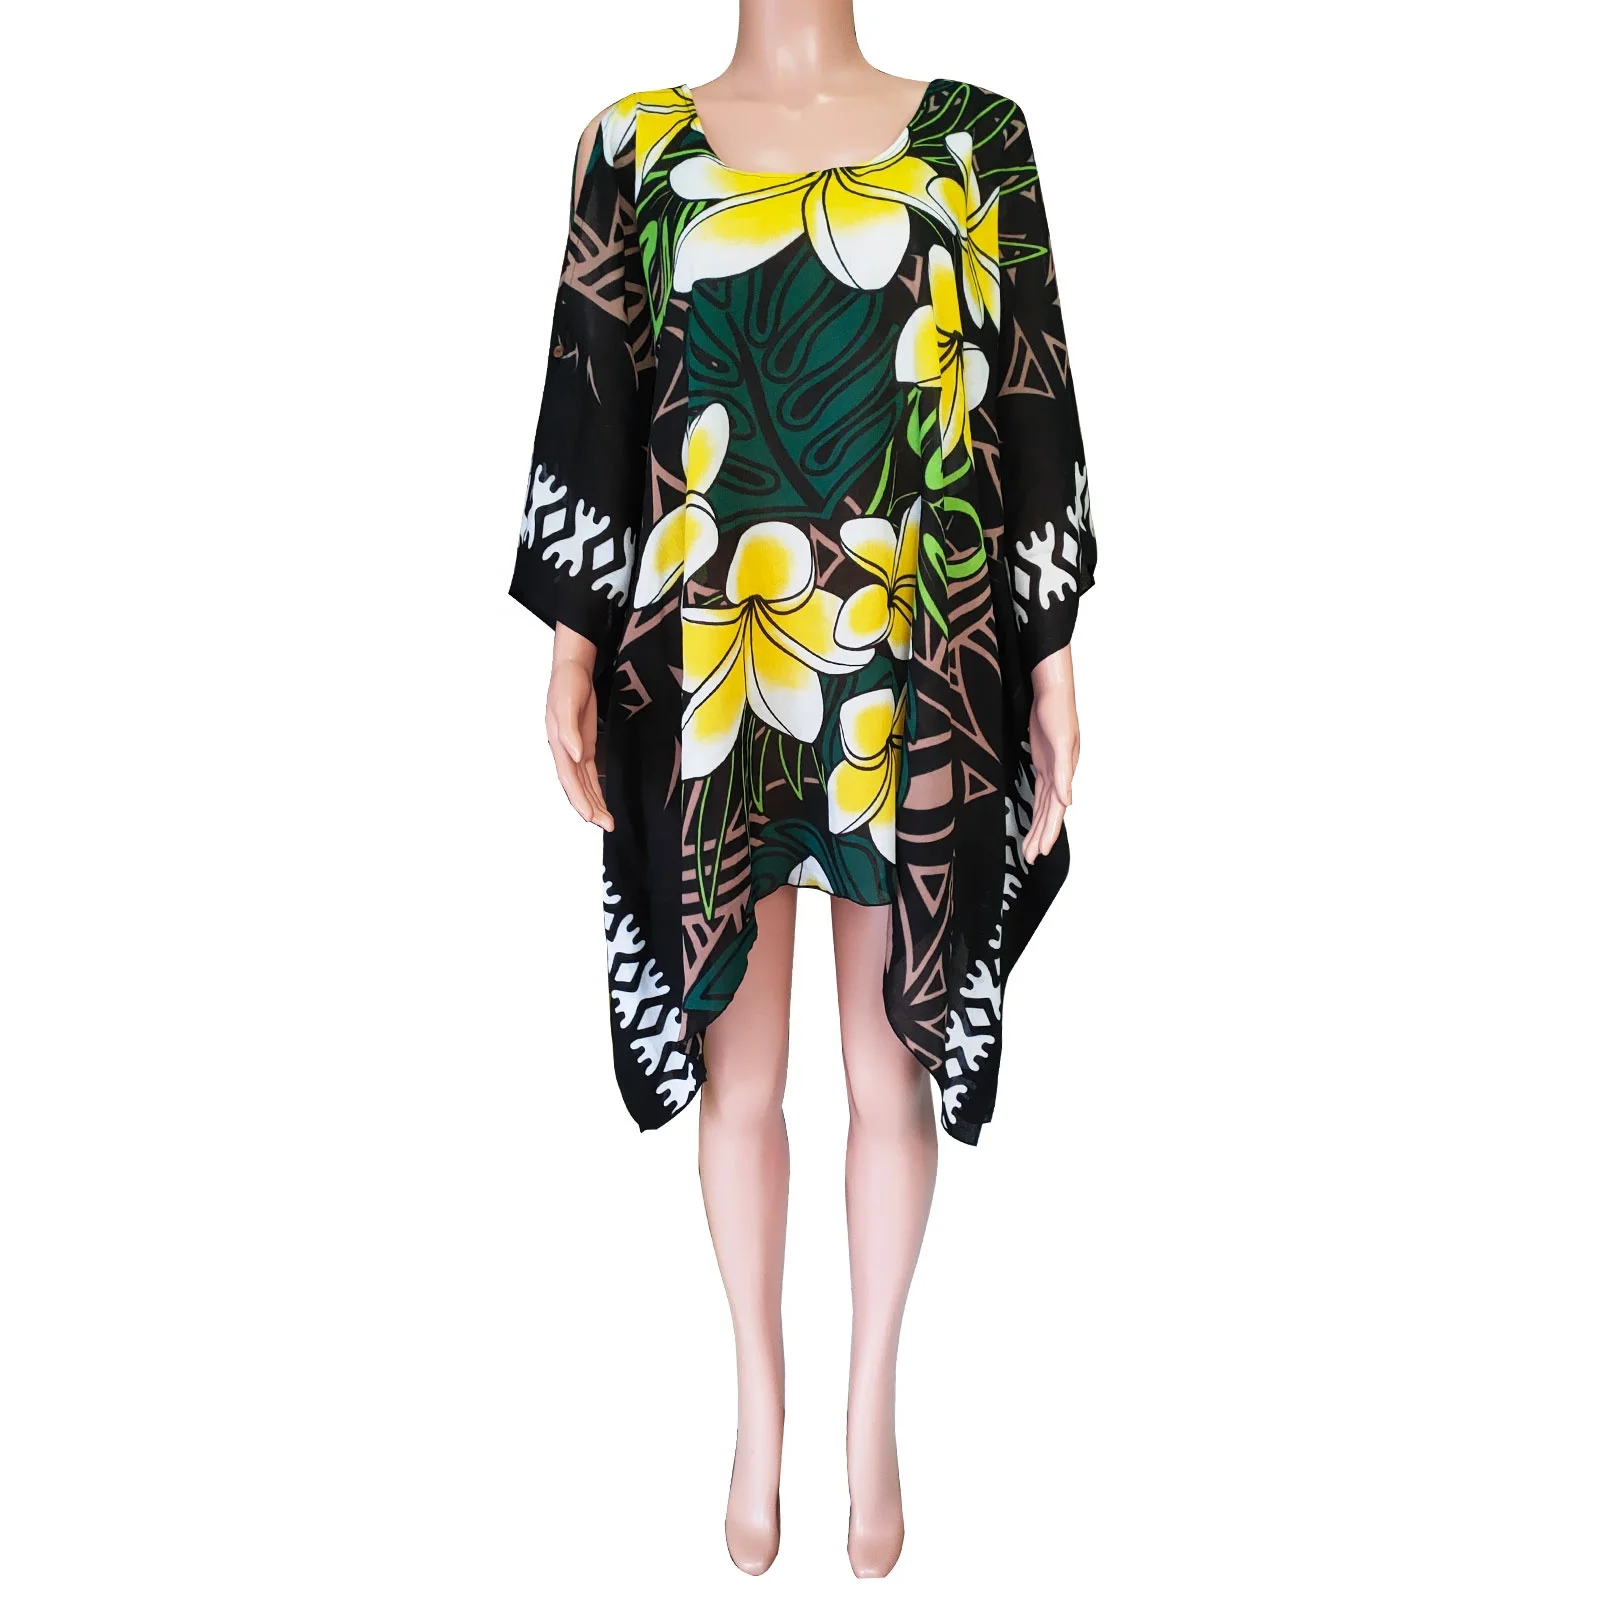 NEW Design Printed Women Casual Poncho Dress Big Plumeria Flower Printed Summer Beach Dresses